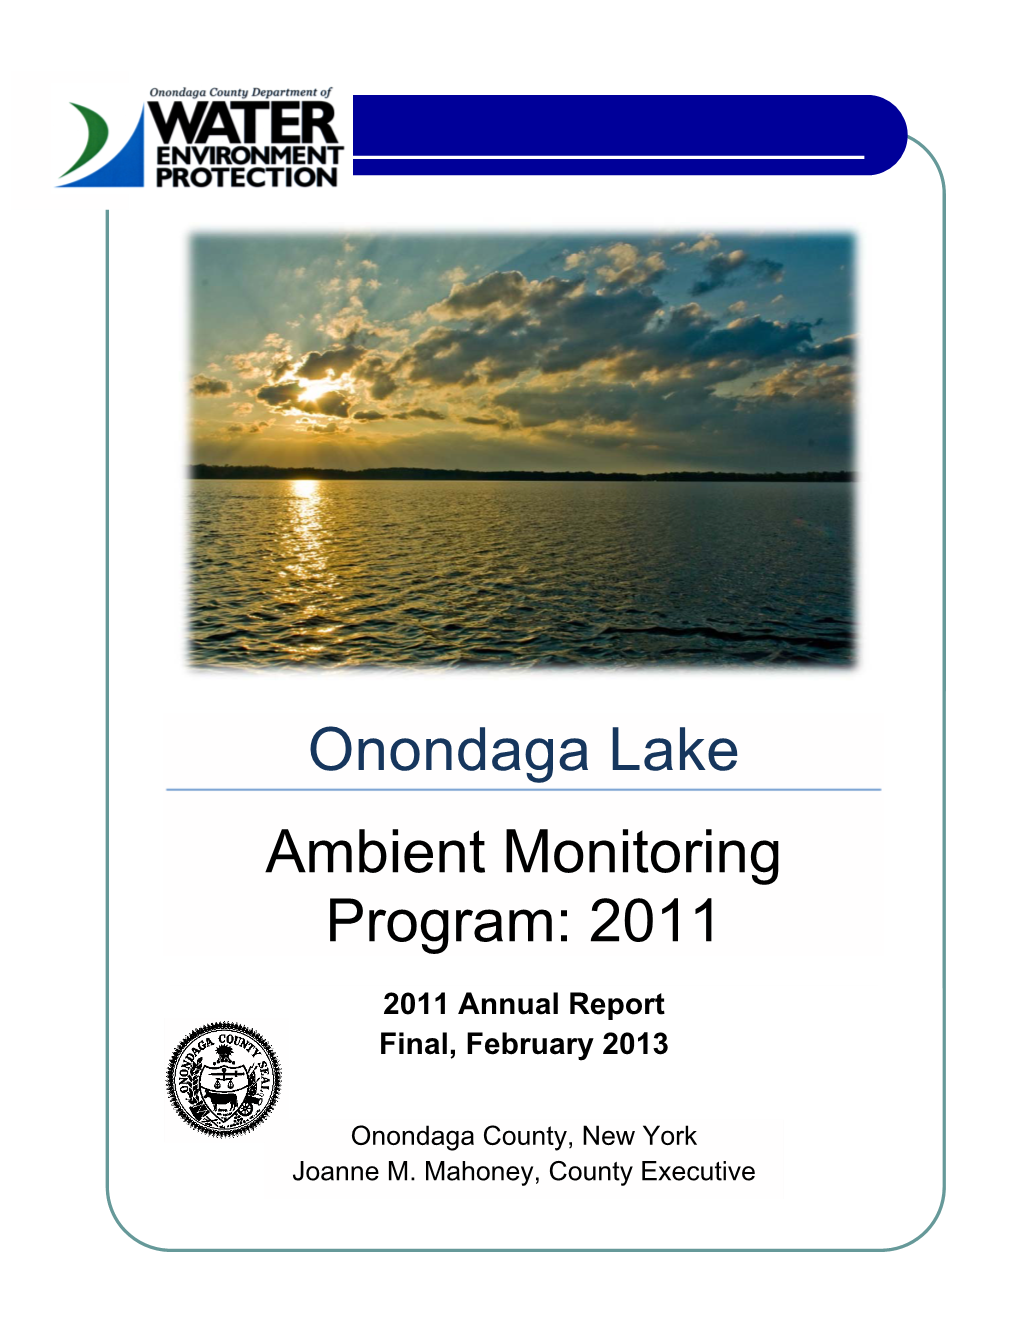 Onondaga Lake Ambient Monitoring Program: 2011